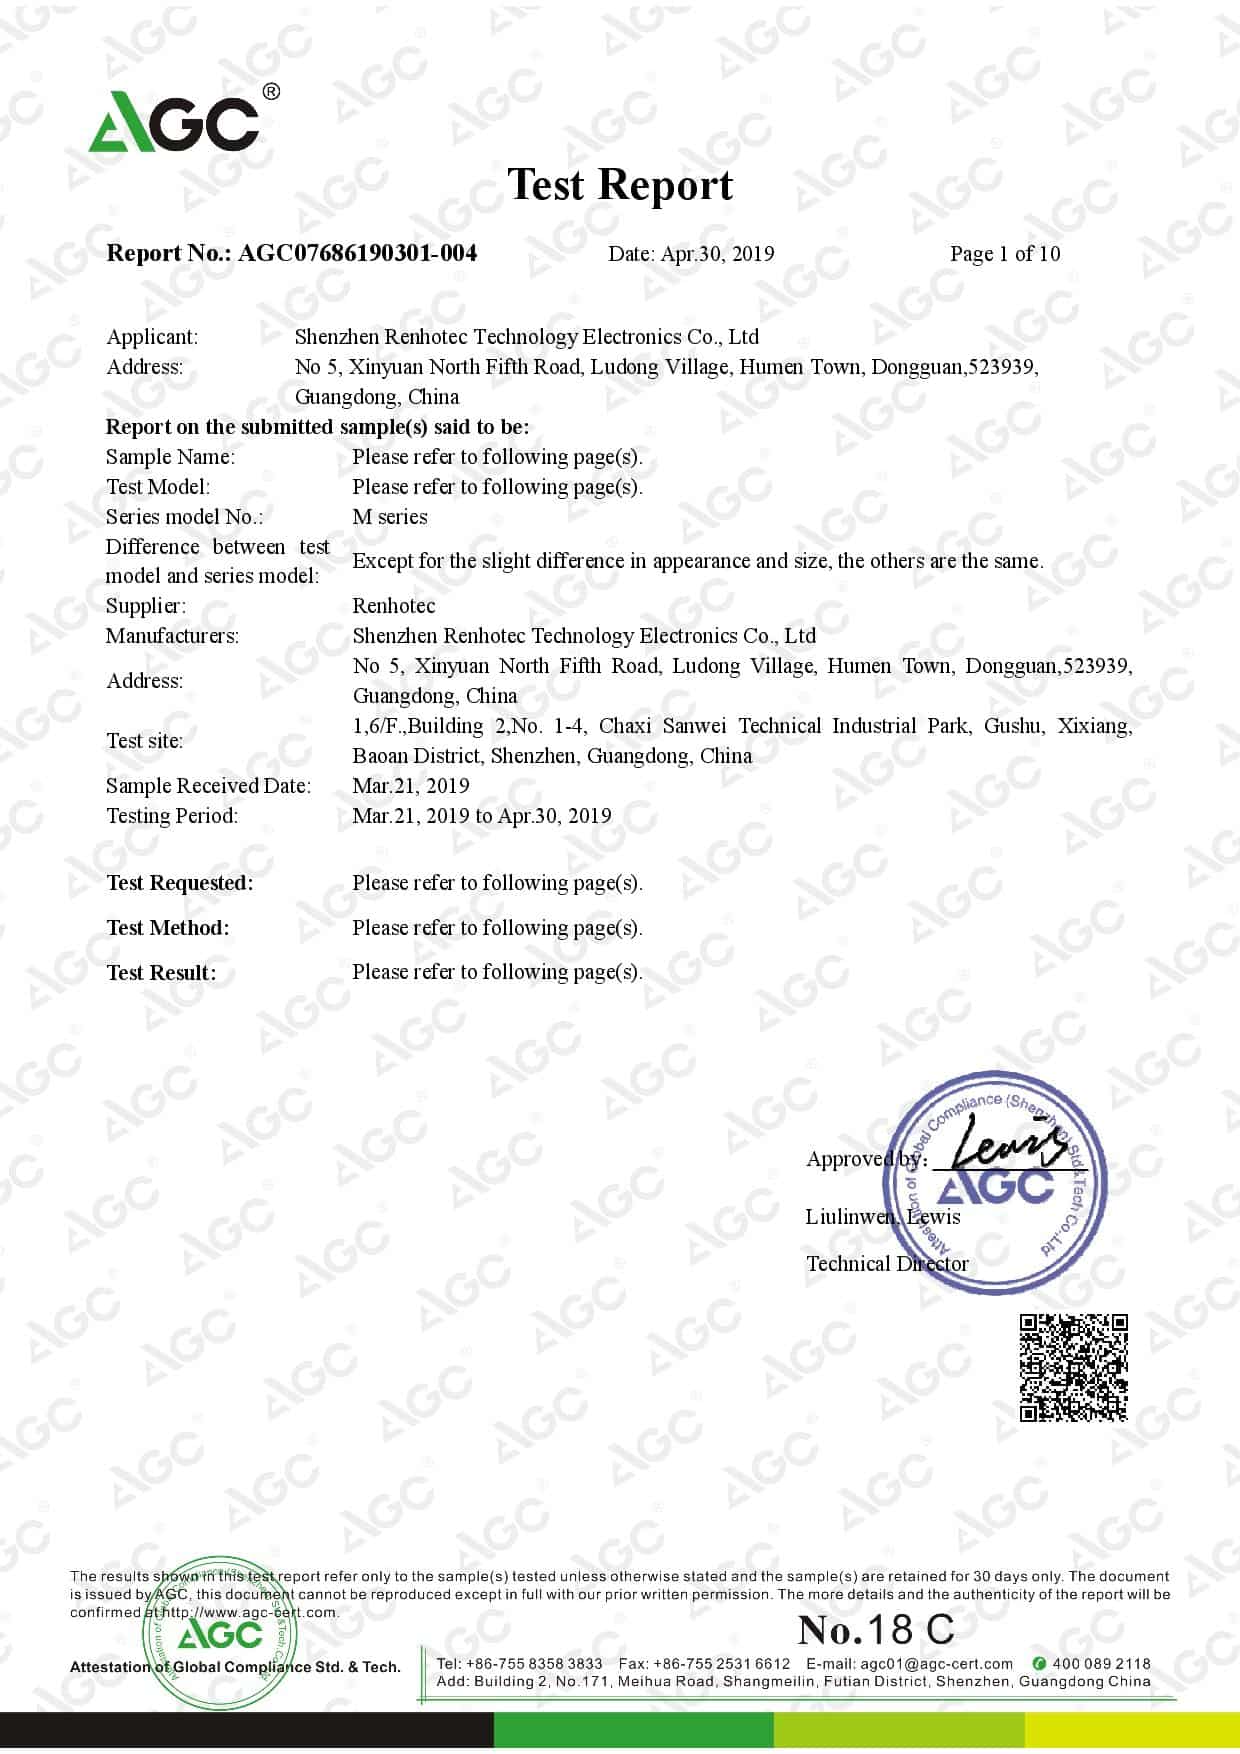 AGC07686190301-004 M Series ROHS Test Report